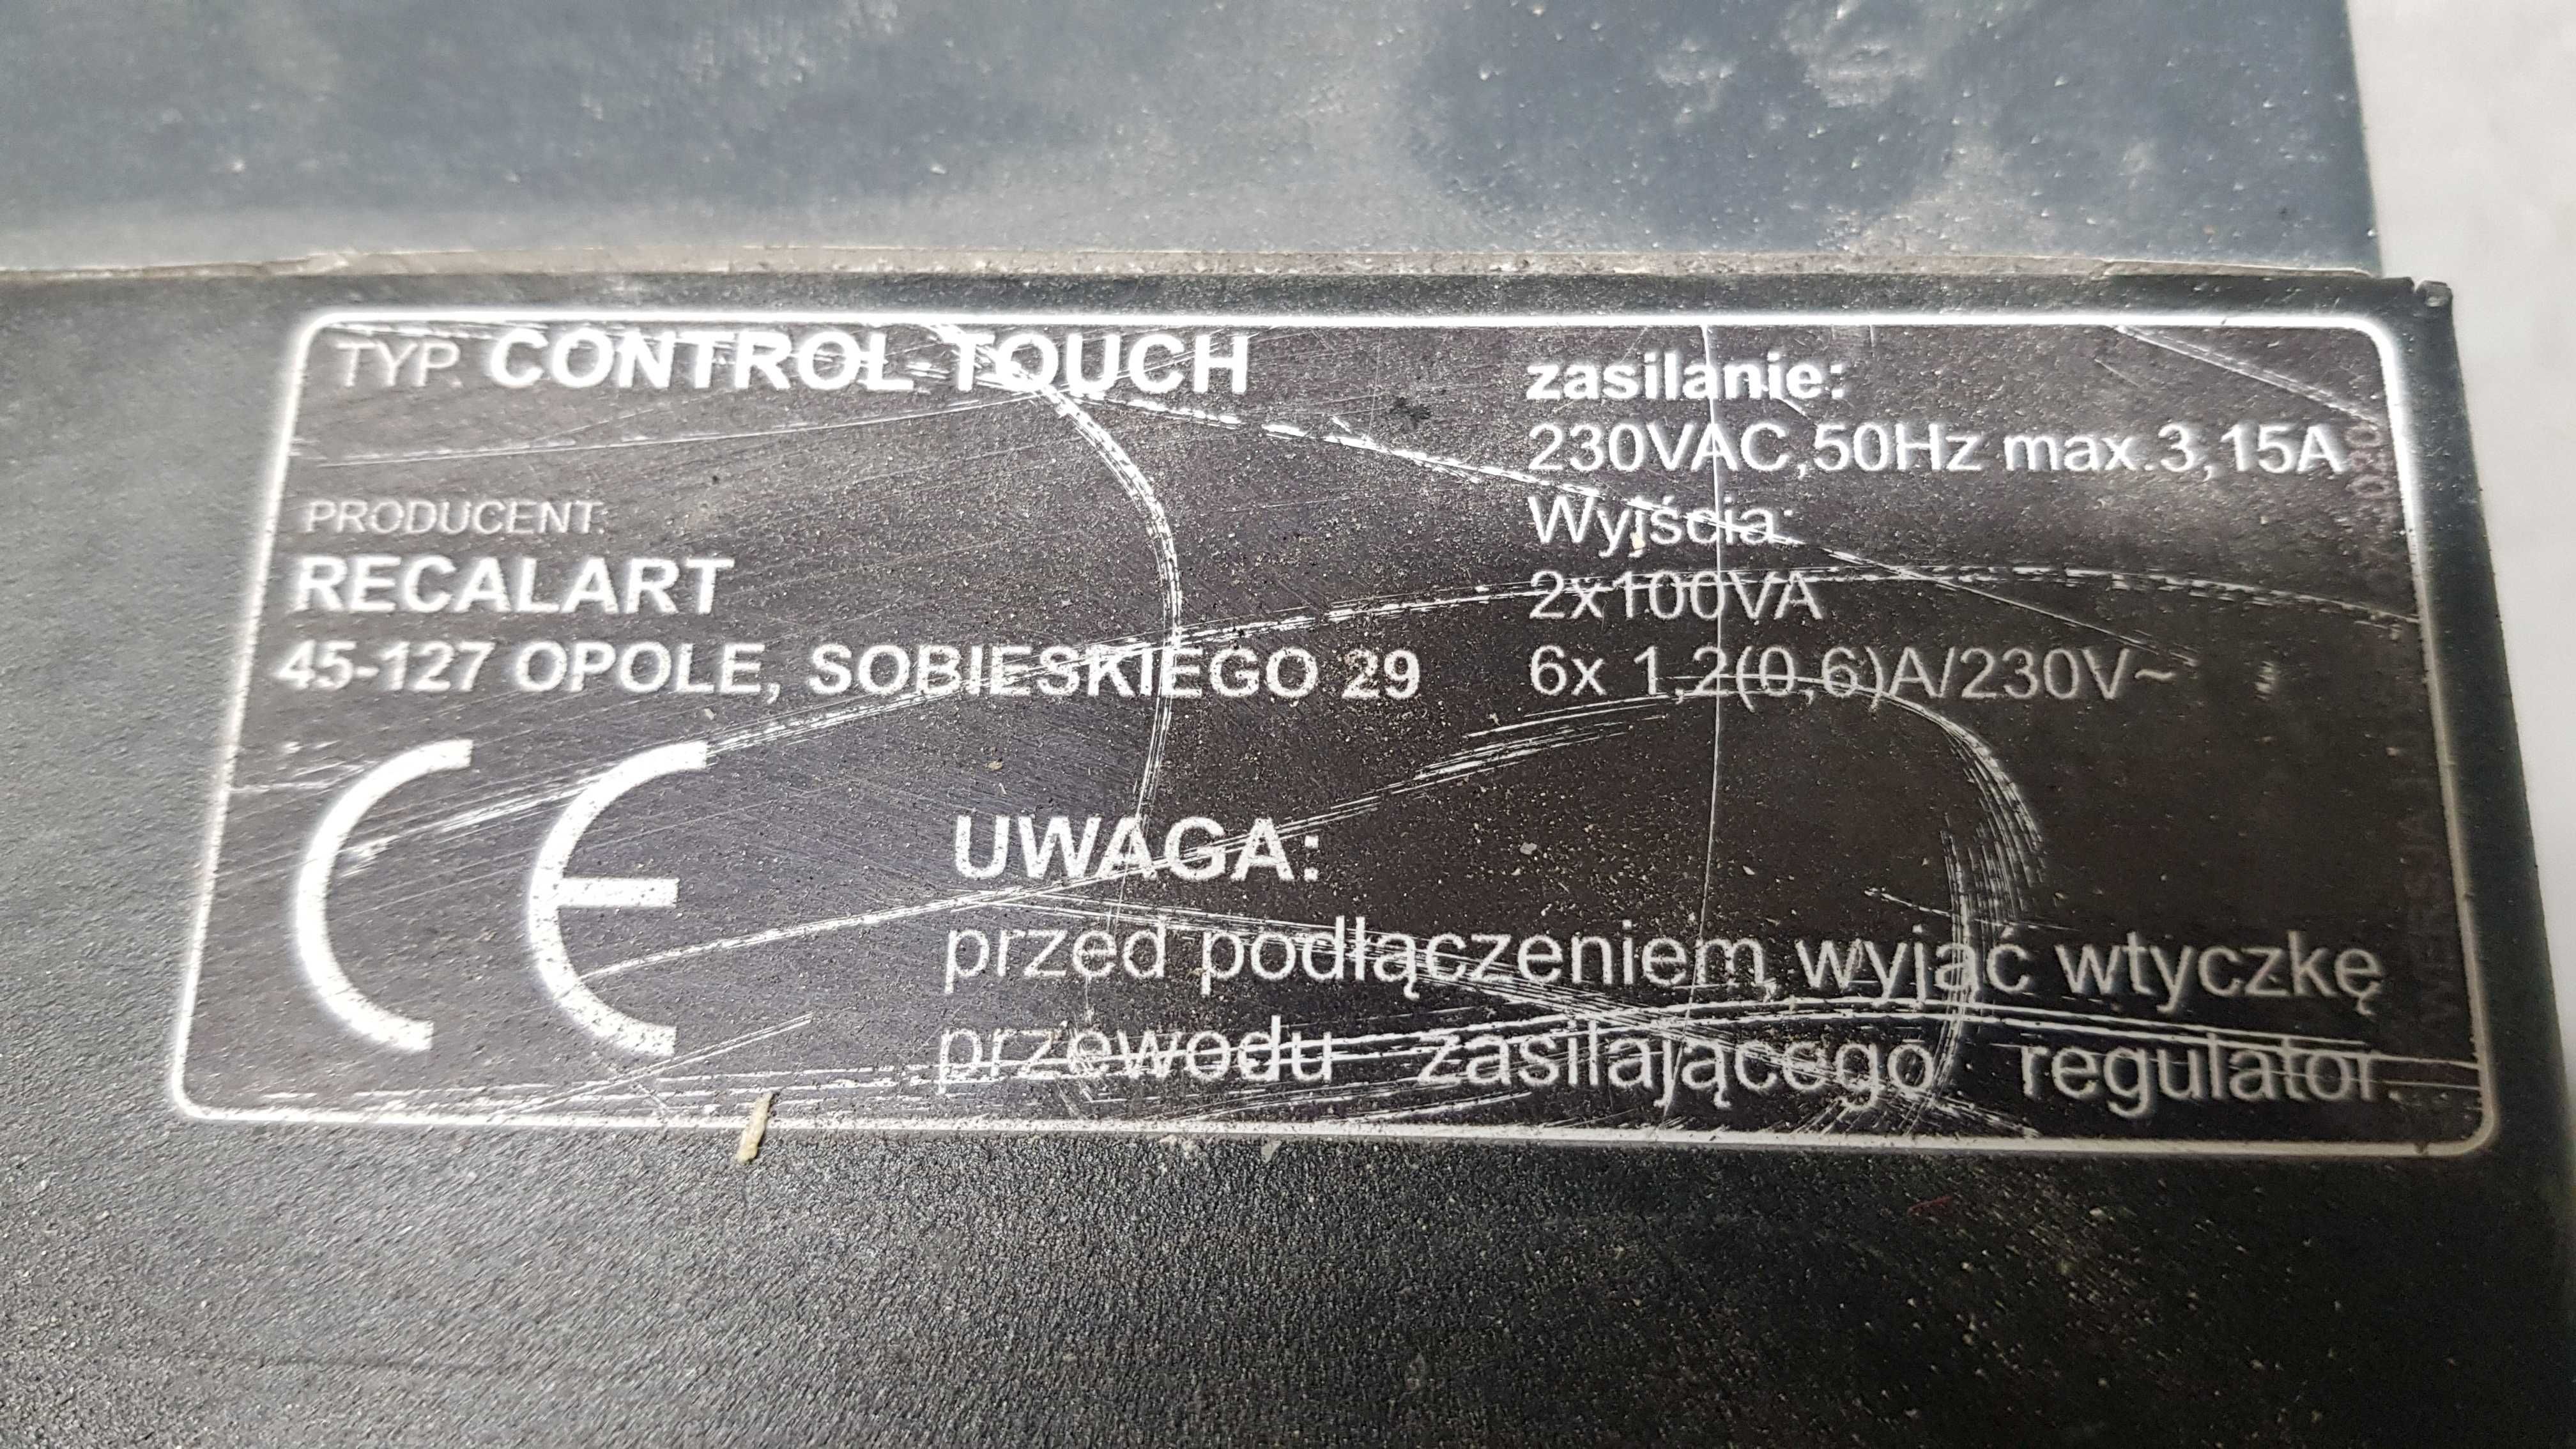 Sterownik Pieca RECALART ELECTRONIC Control Touch na Ekogroszek